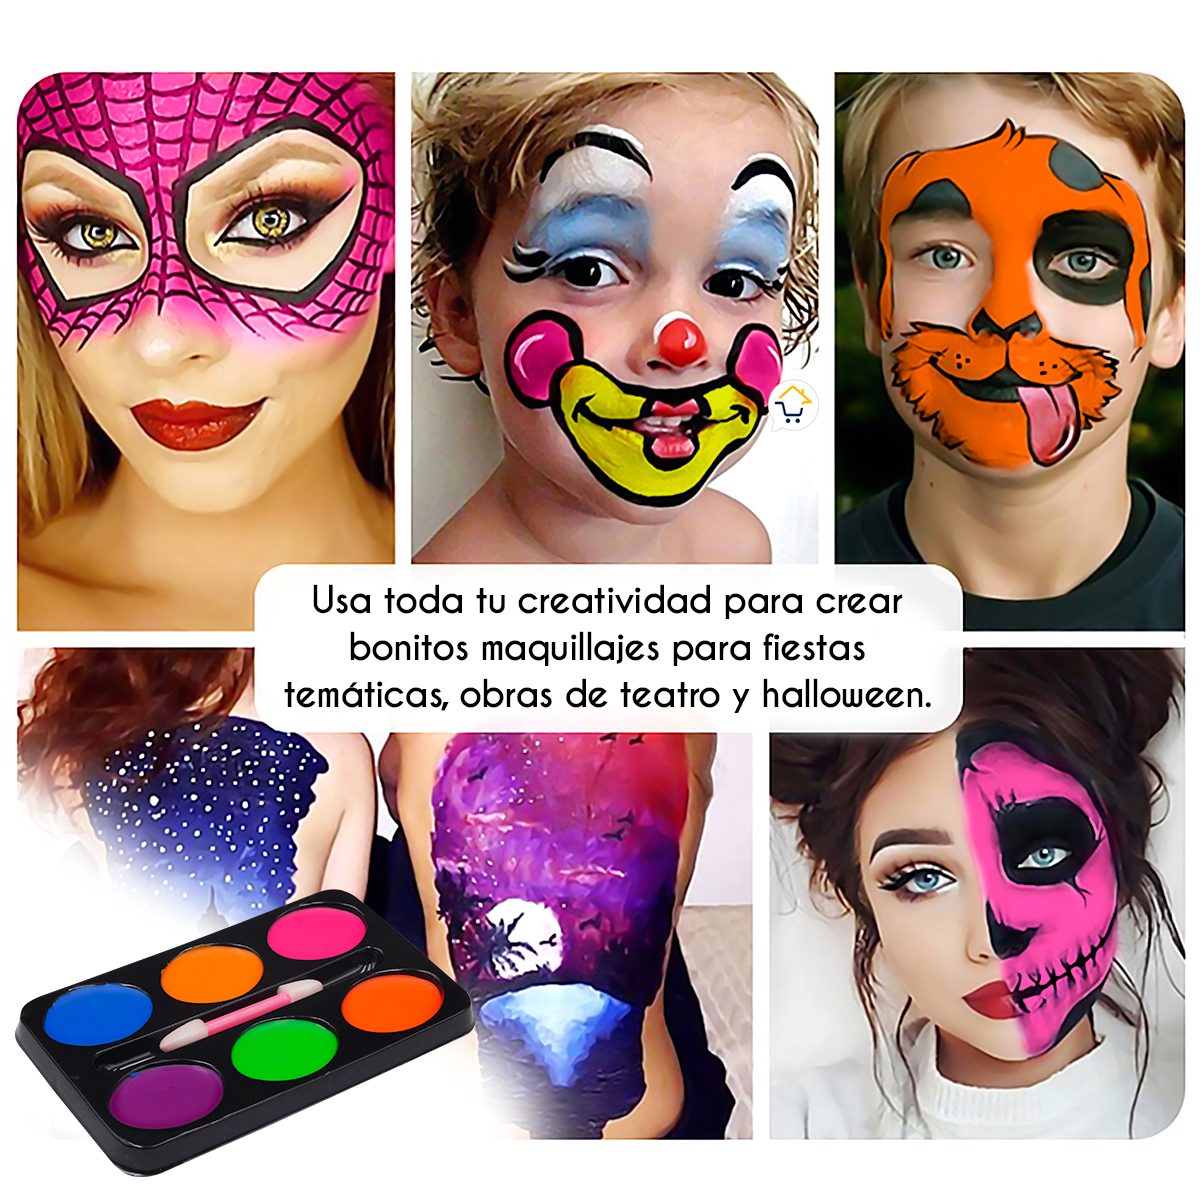 Peluca Afro Crespo y Pinta Caritas Maquillaje Halloween AFR0771